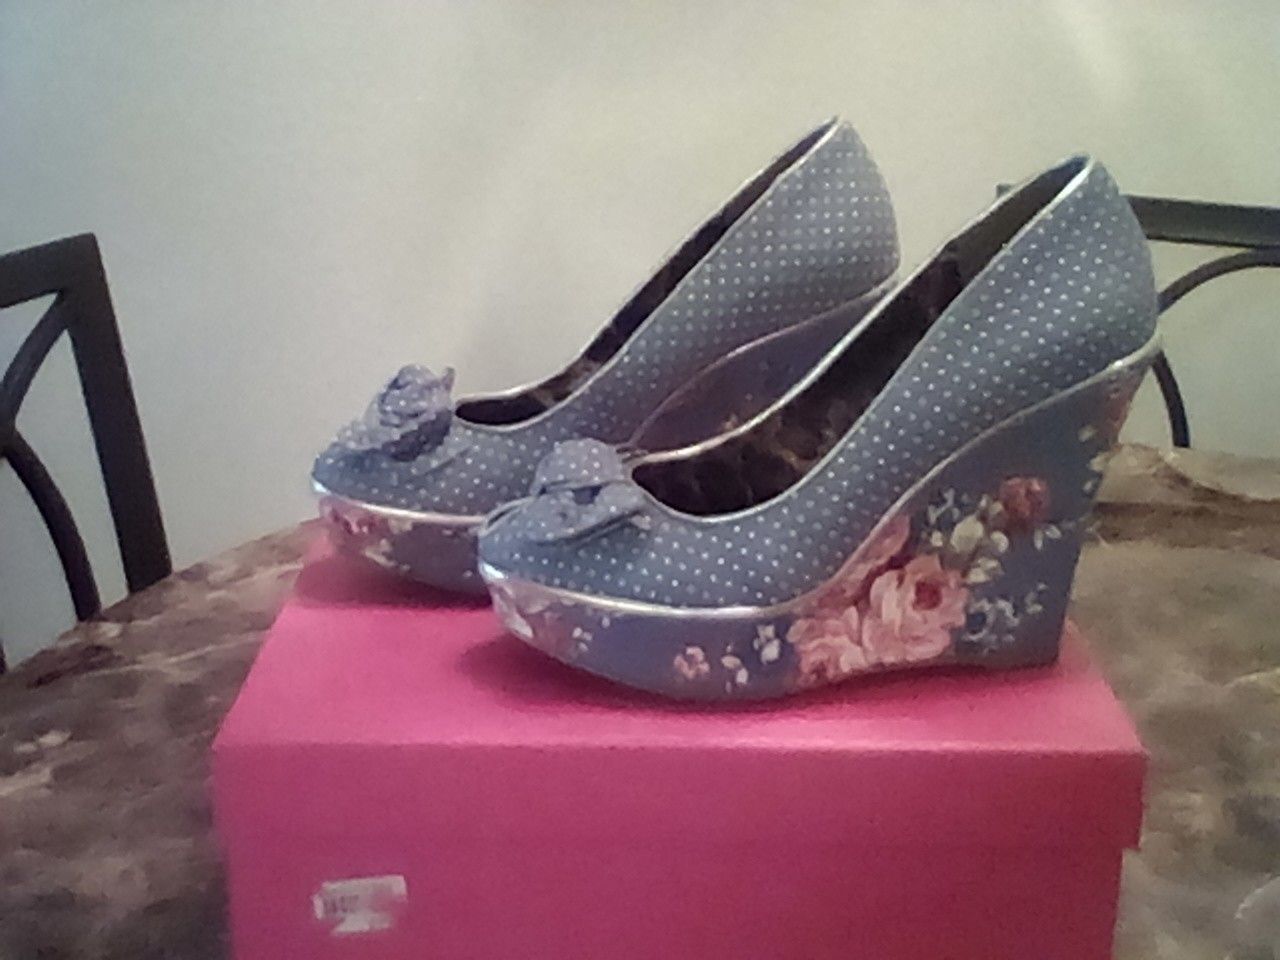 Super Adorable Betsey Johnson Wedge Heel Shoes!!!